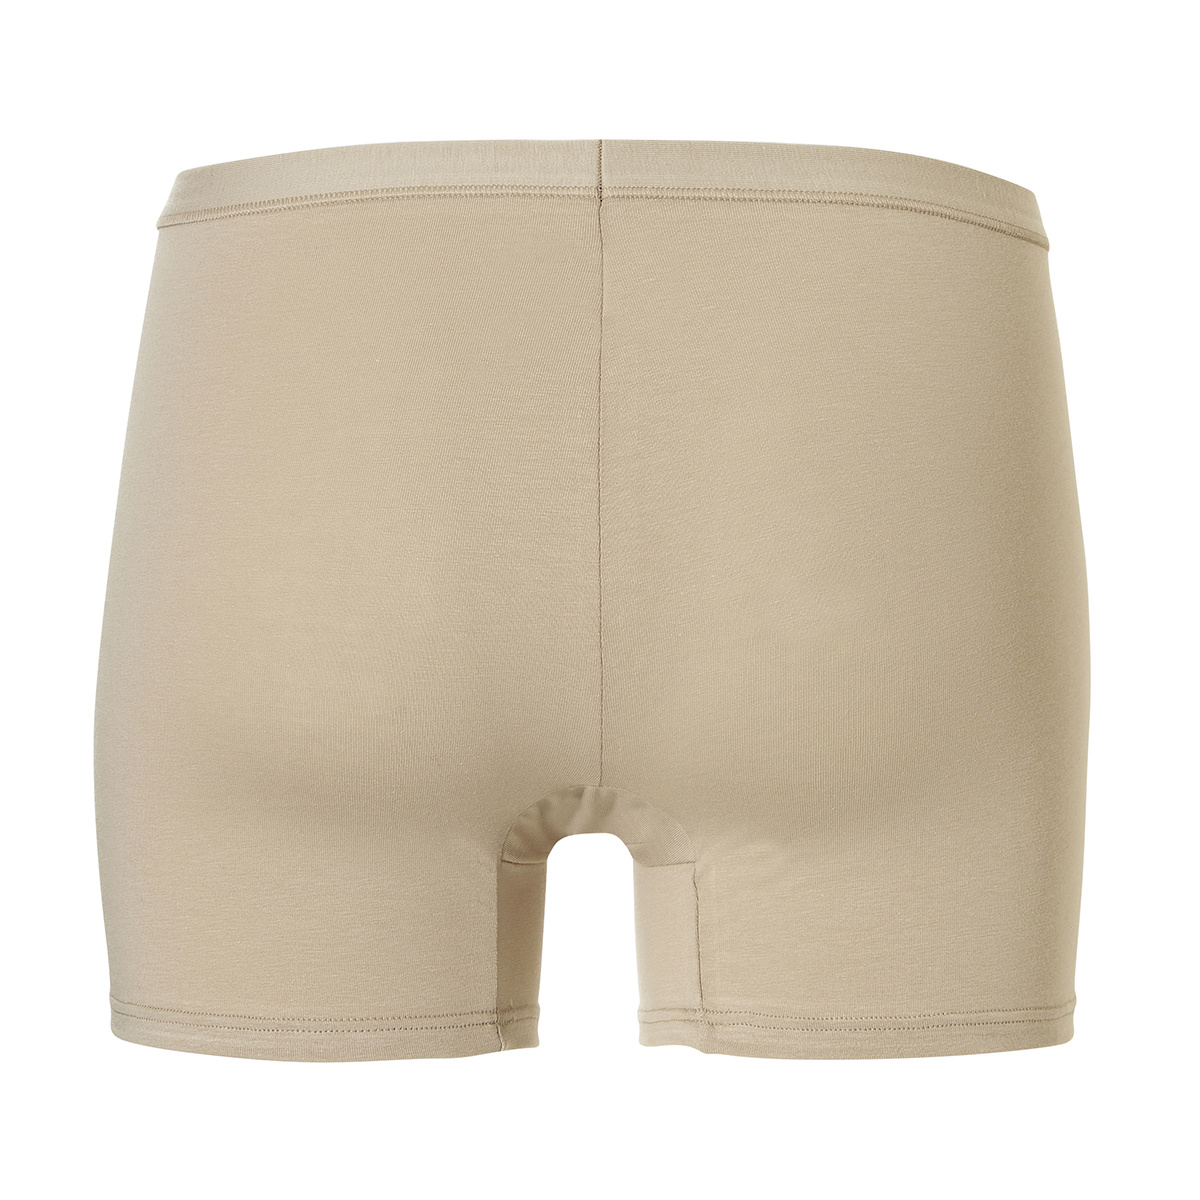 https://cdn.webshopapp.com/shops/316659/files/426956349/cotonella-cotonella-ladies-boxer-shorts-cotton-bei.jpg